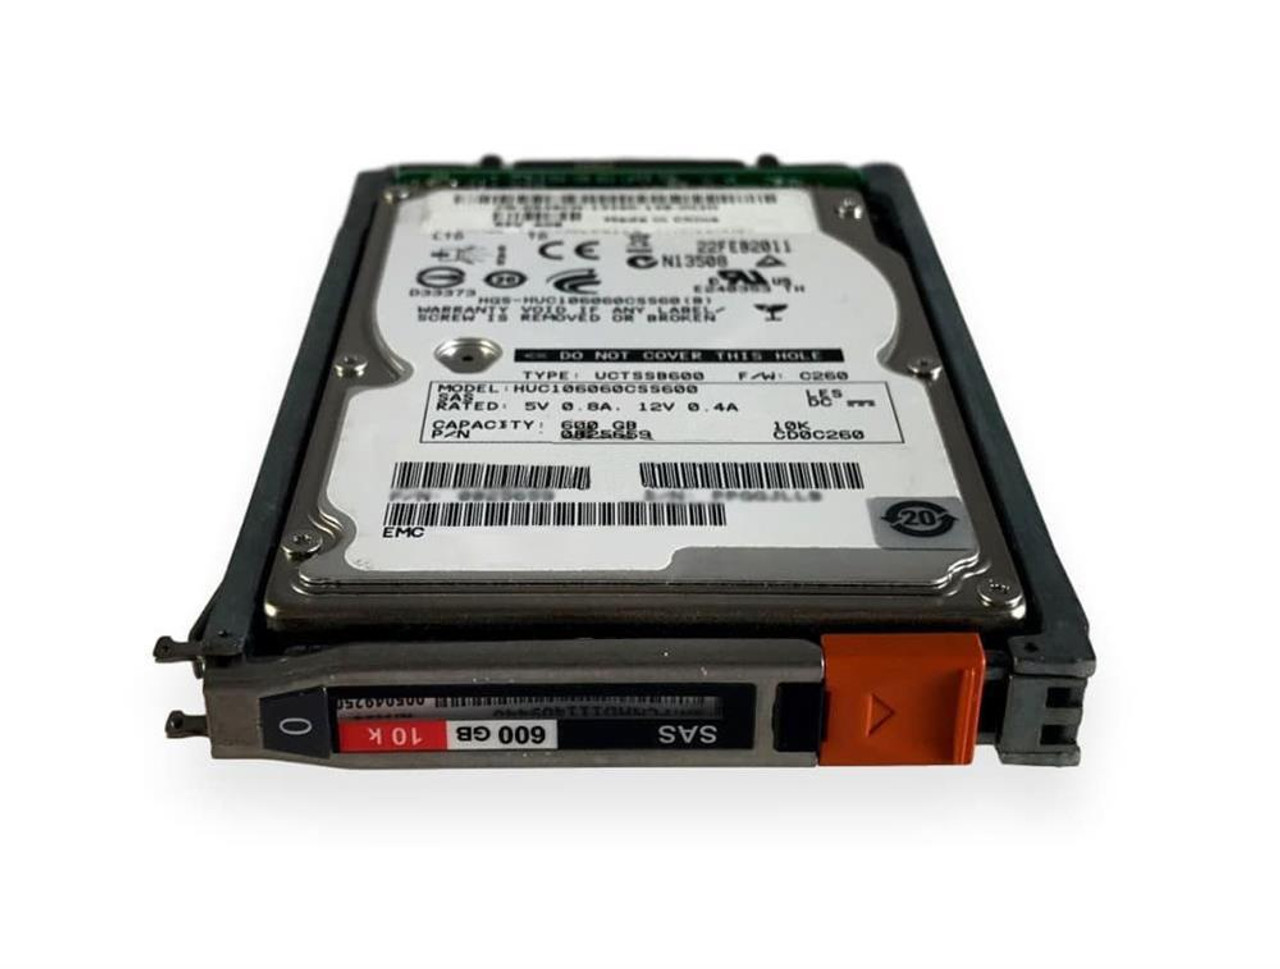 D4-D2S10-600U EMC 600GB 10000RPM SAS 12Gbps 2.5-inch Internal Hard Drive for D4 80 x 2.5 Enclosure